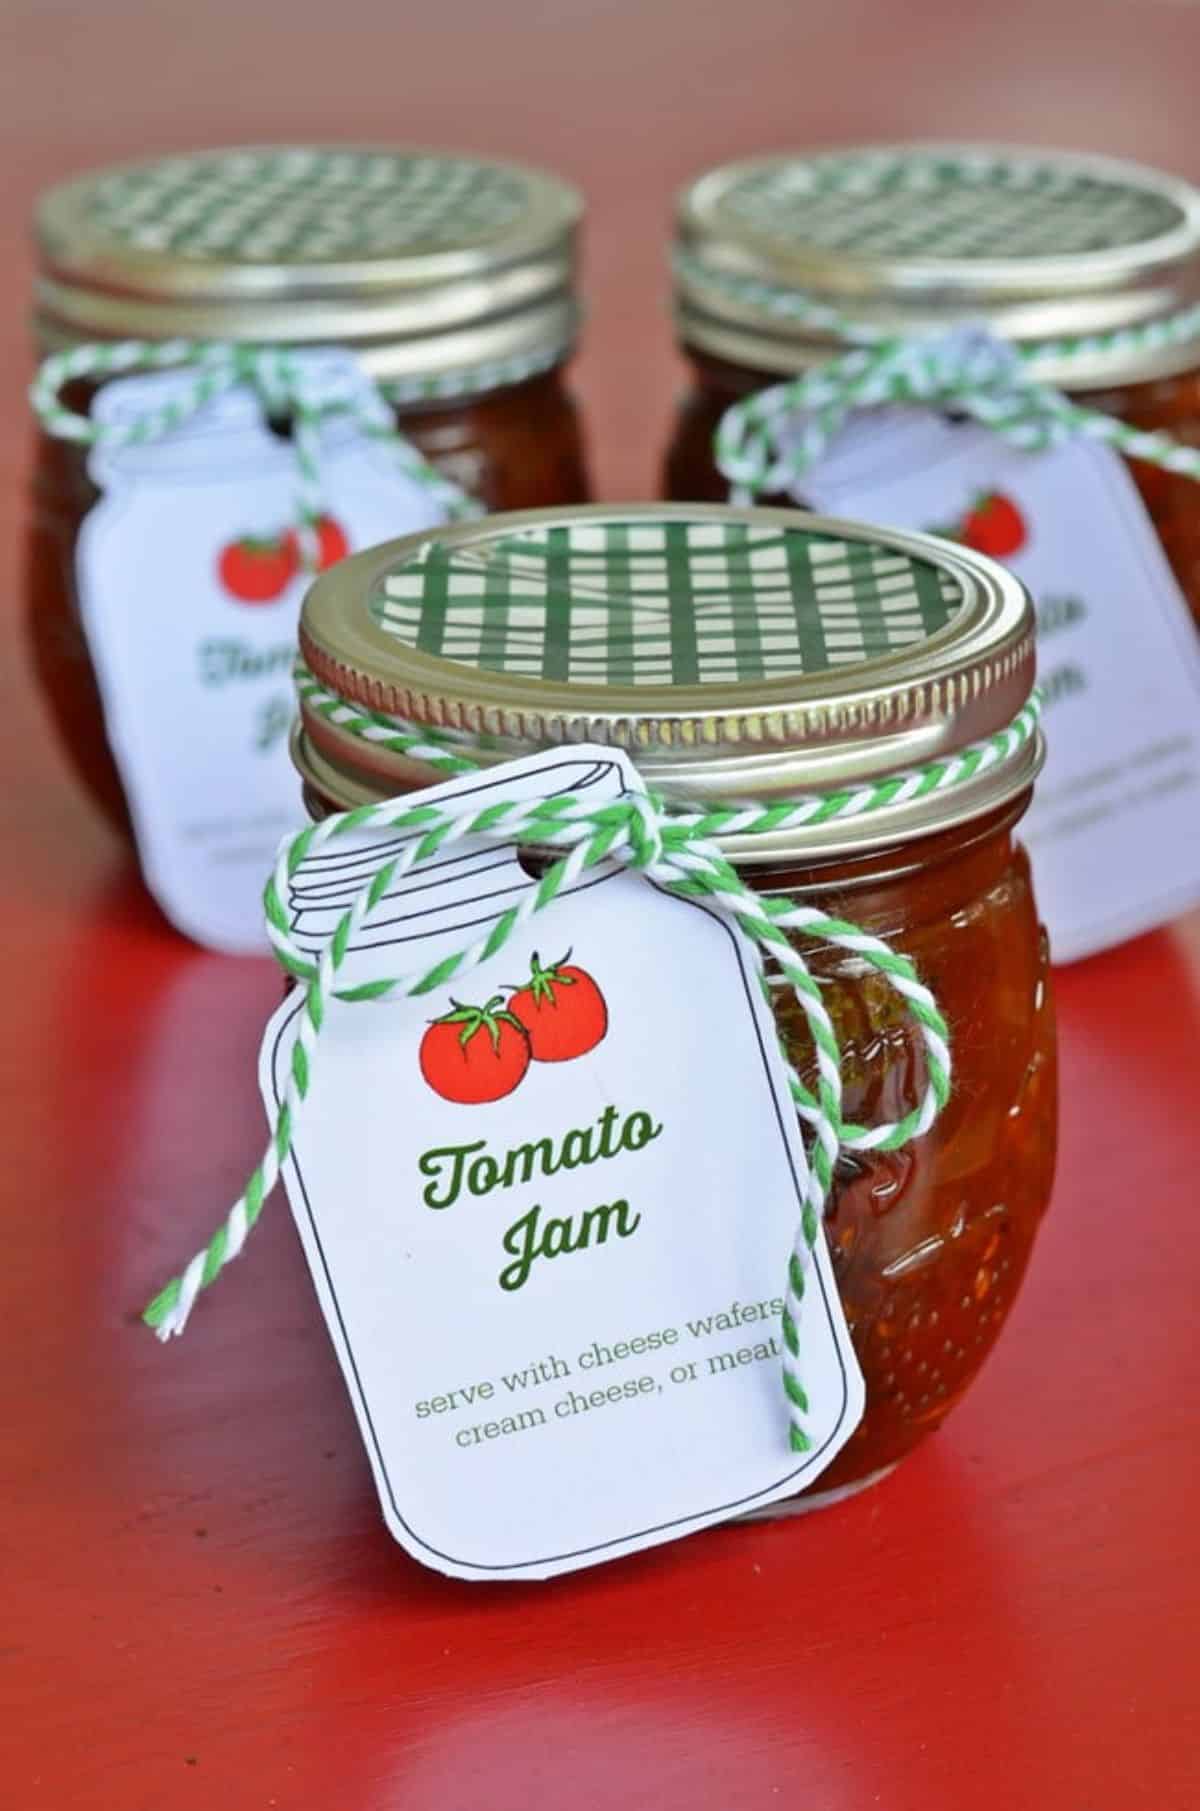 Homemade tomato jam in glass jars.